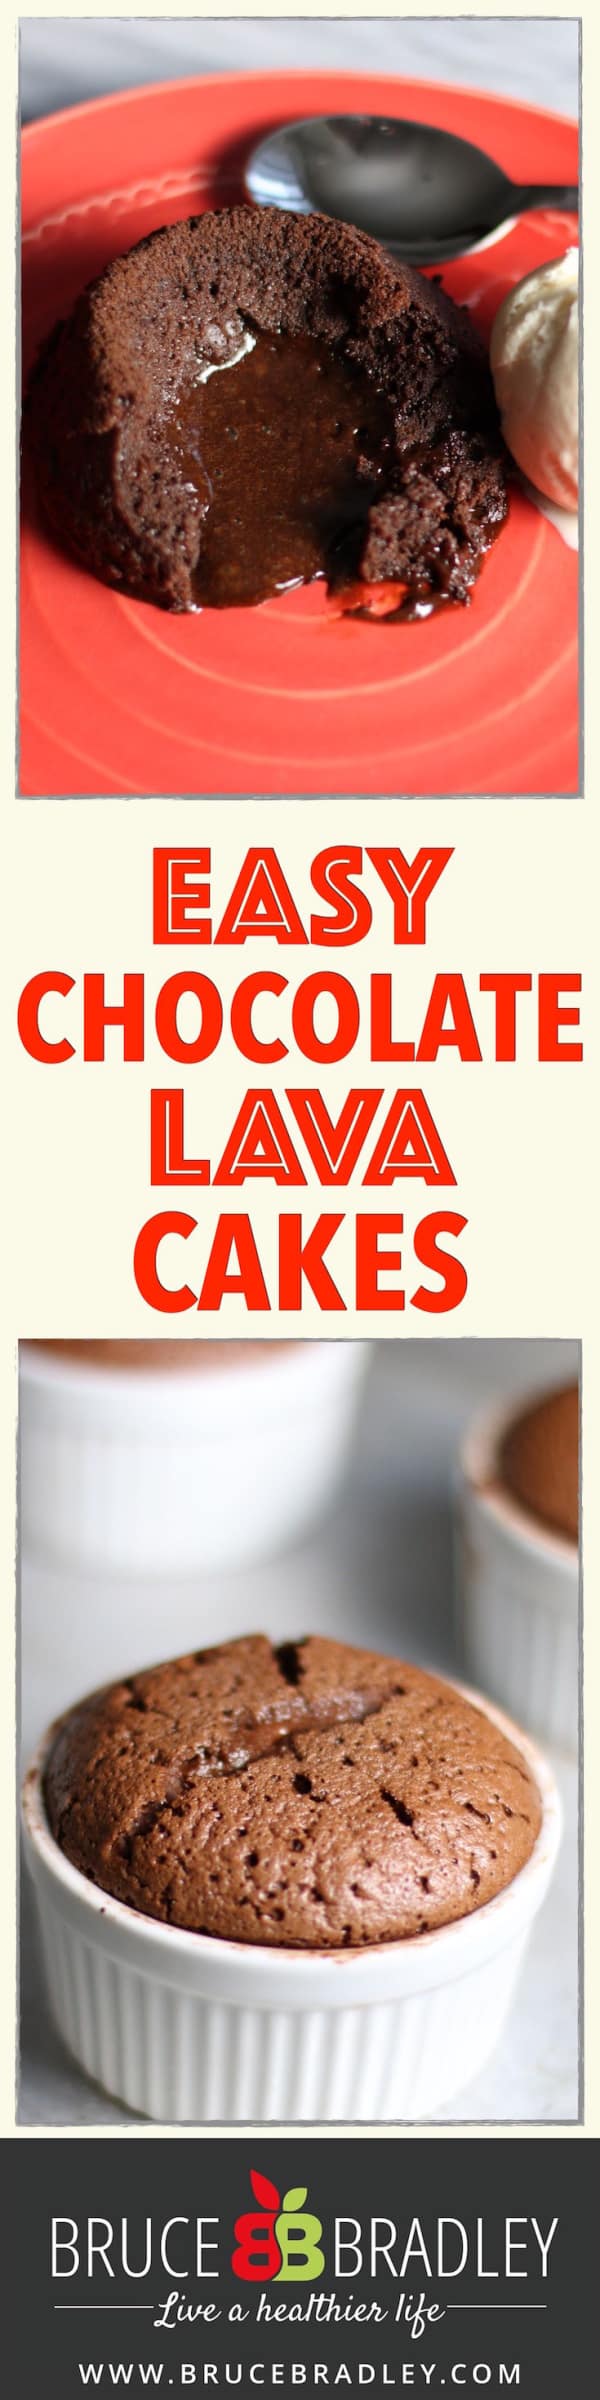 Recipe: Decadent But Easy Chocolate Lava Cakes - Bruce Bradley